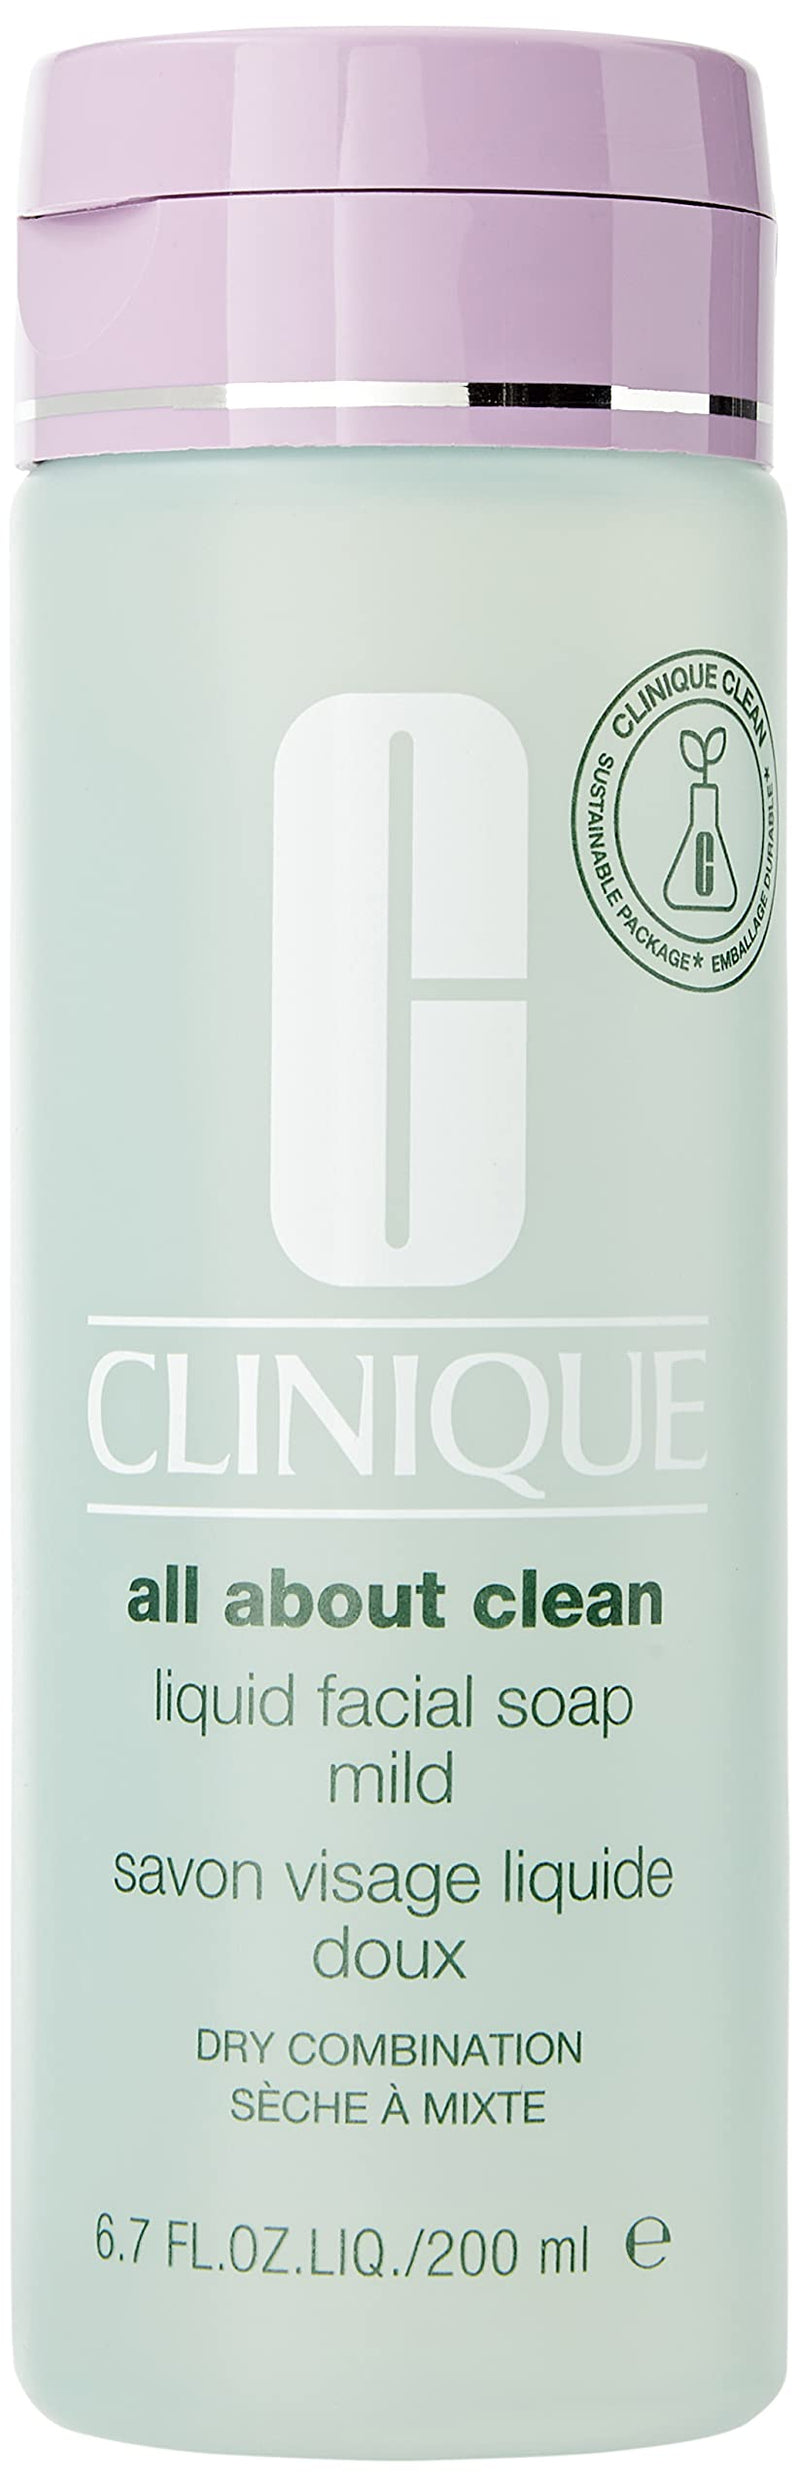 Clinique Cleansing Range Liquid Facial Soap 200ml Mild